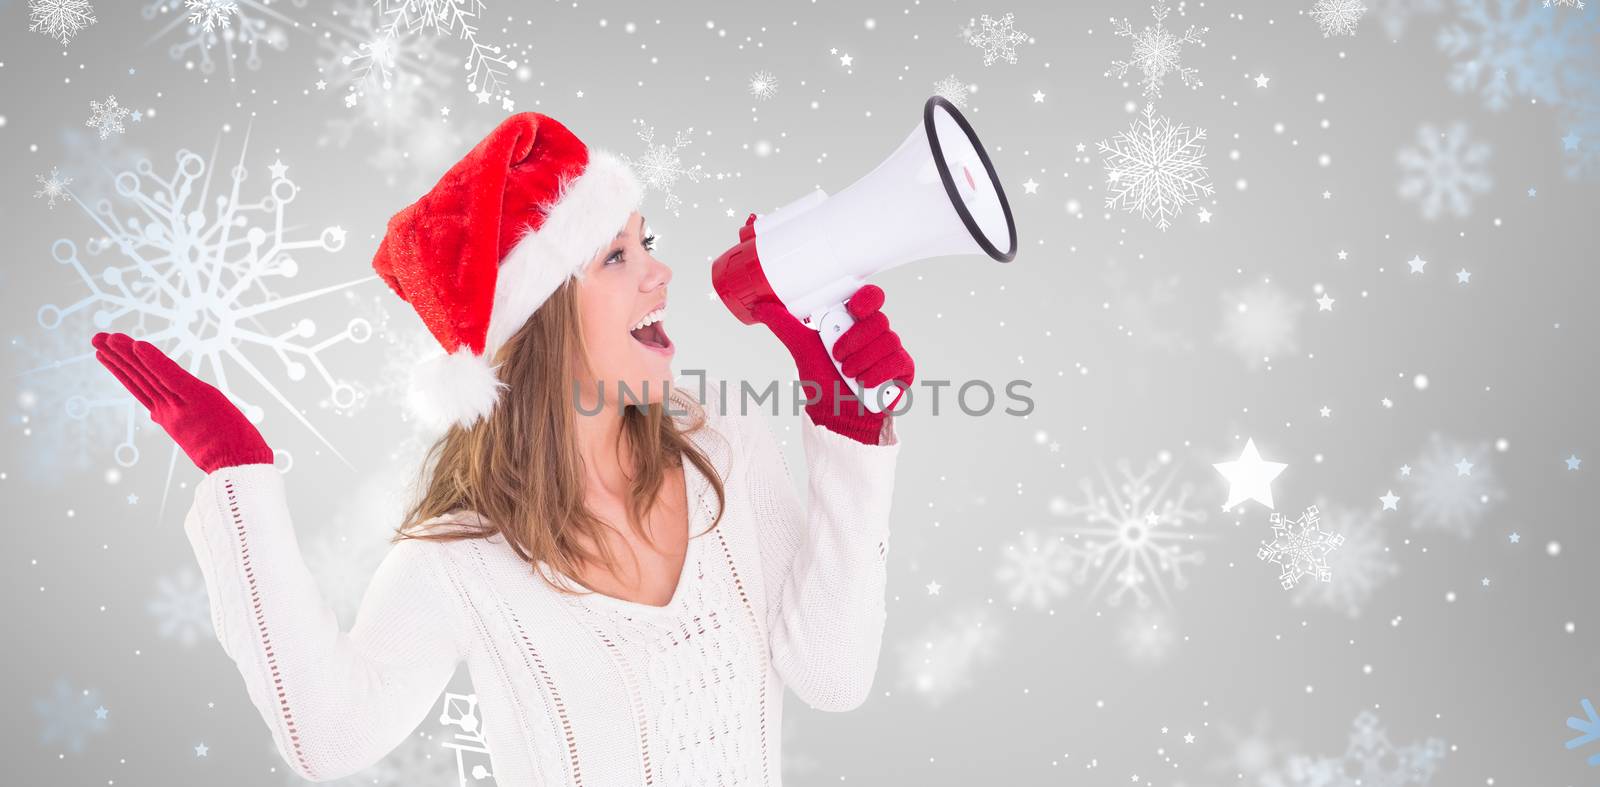 Composite image of festive blonde shouting through megaphone by Wavebreakmedia